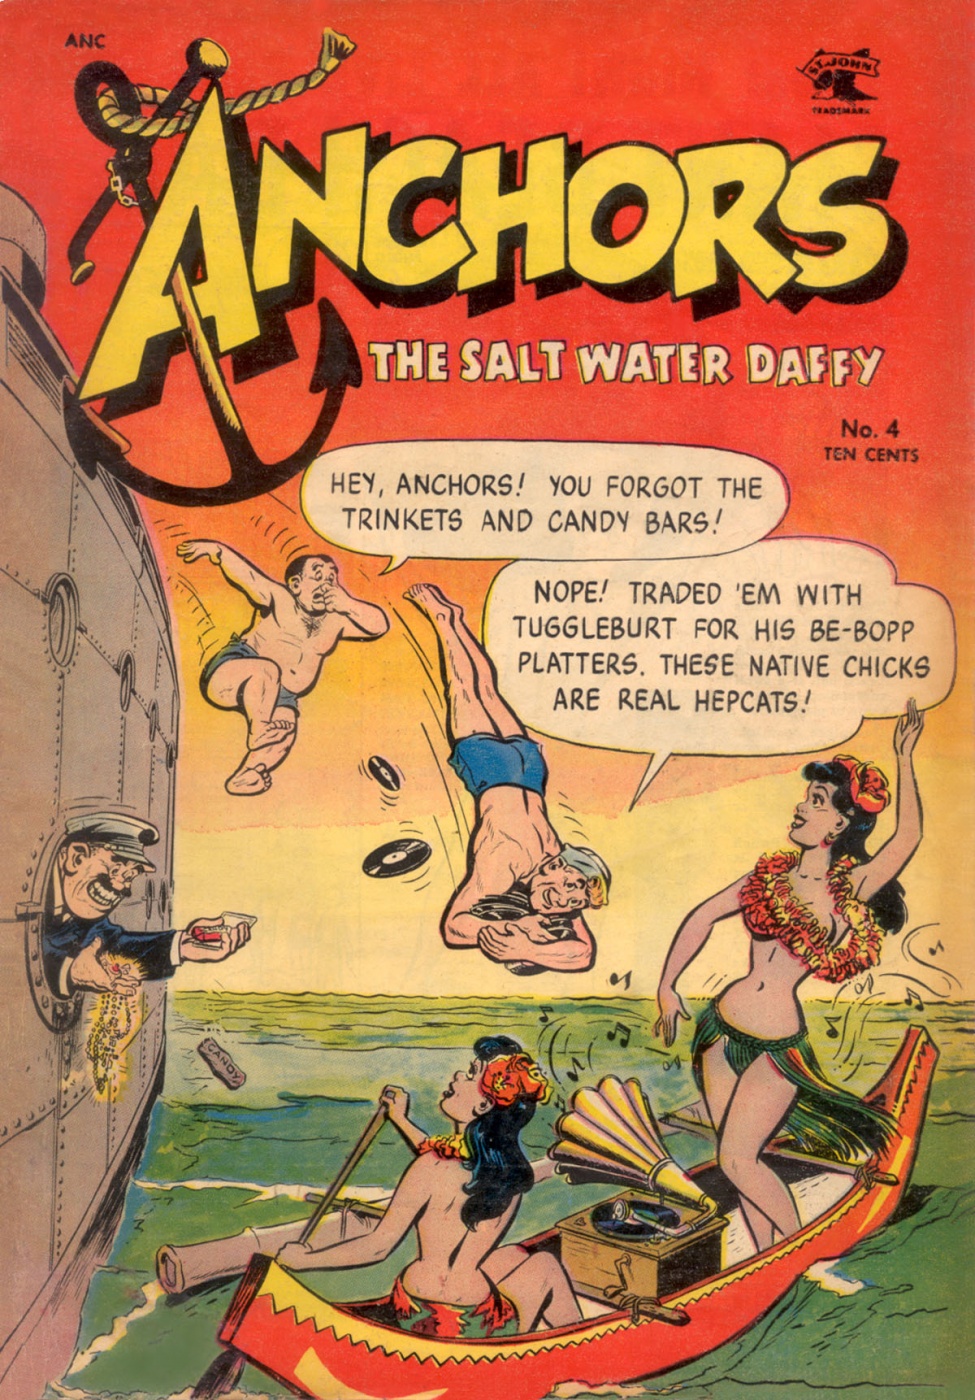 Anchors the Salt Water Daffy - Comics (c) (1)